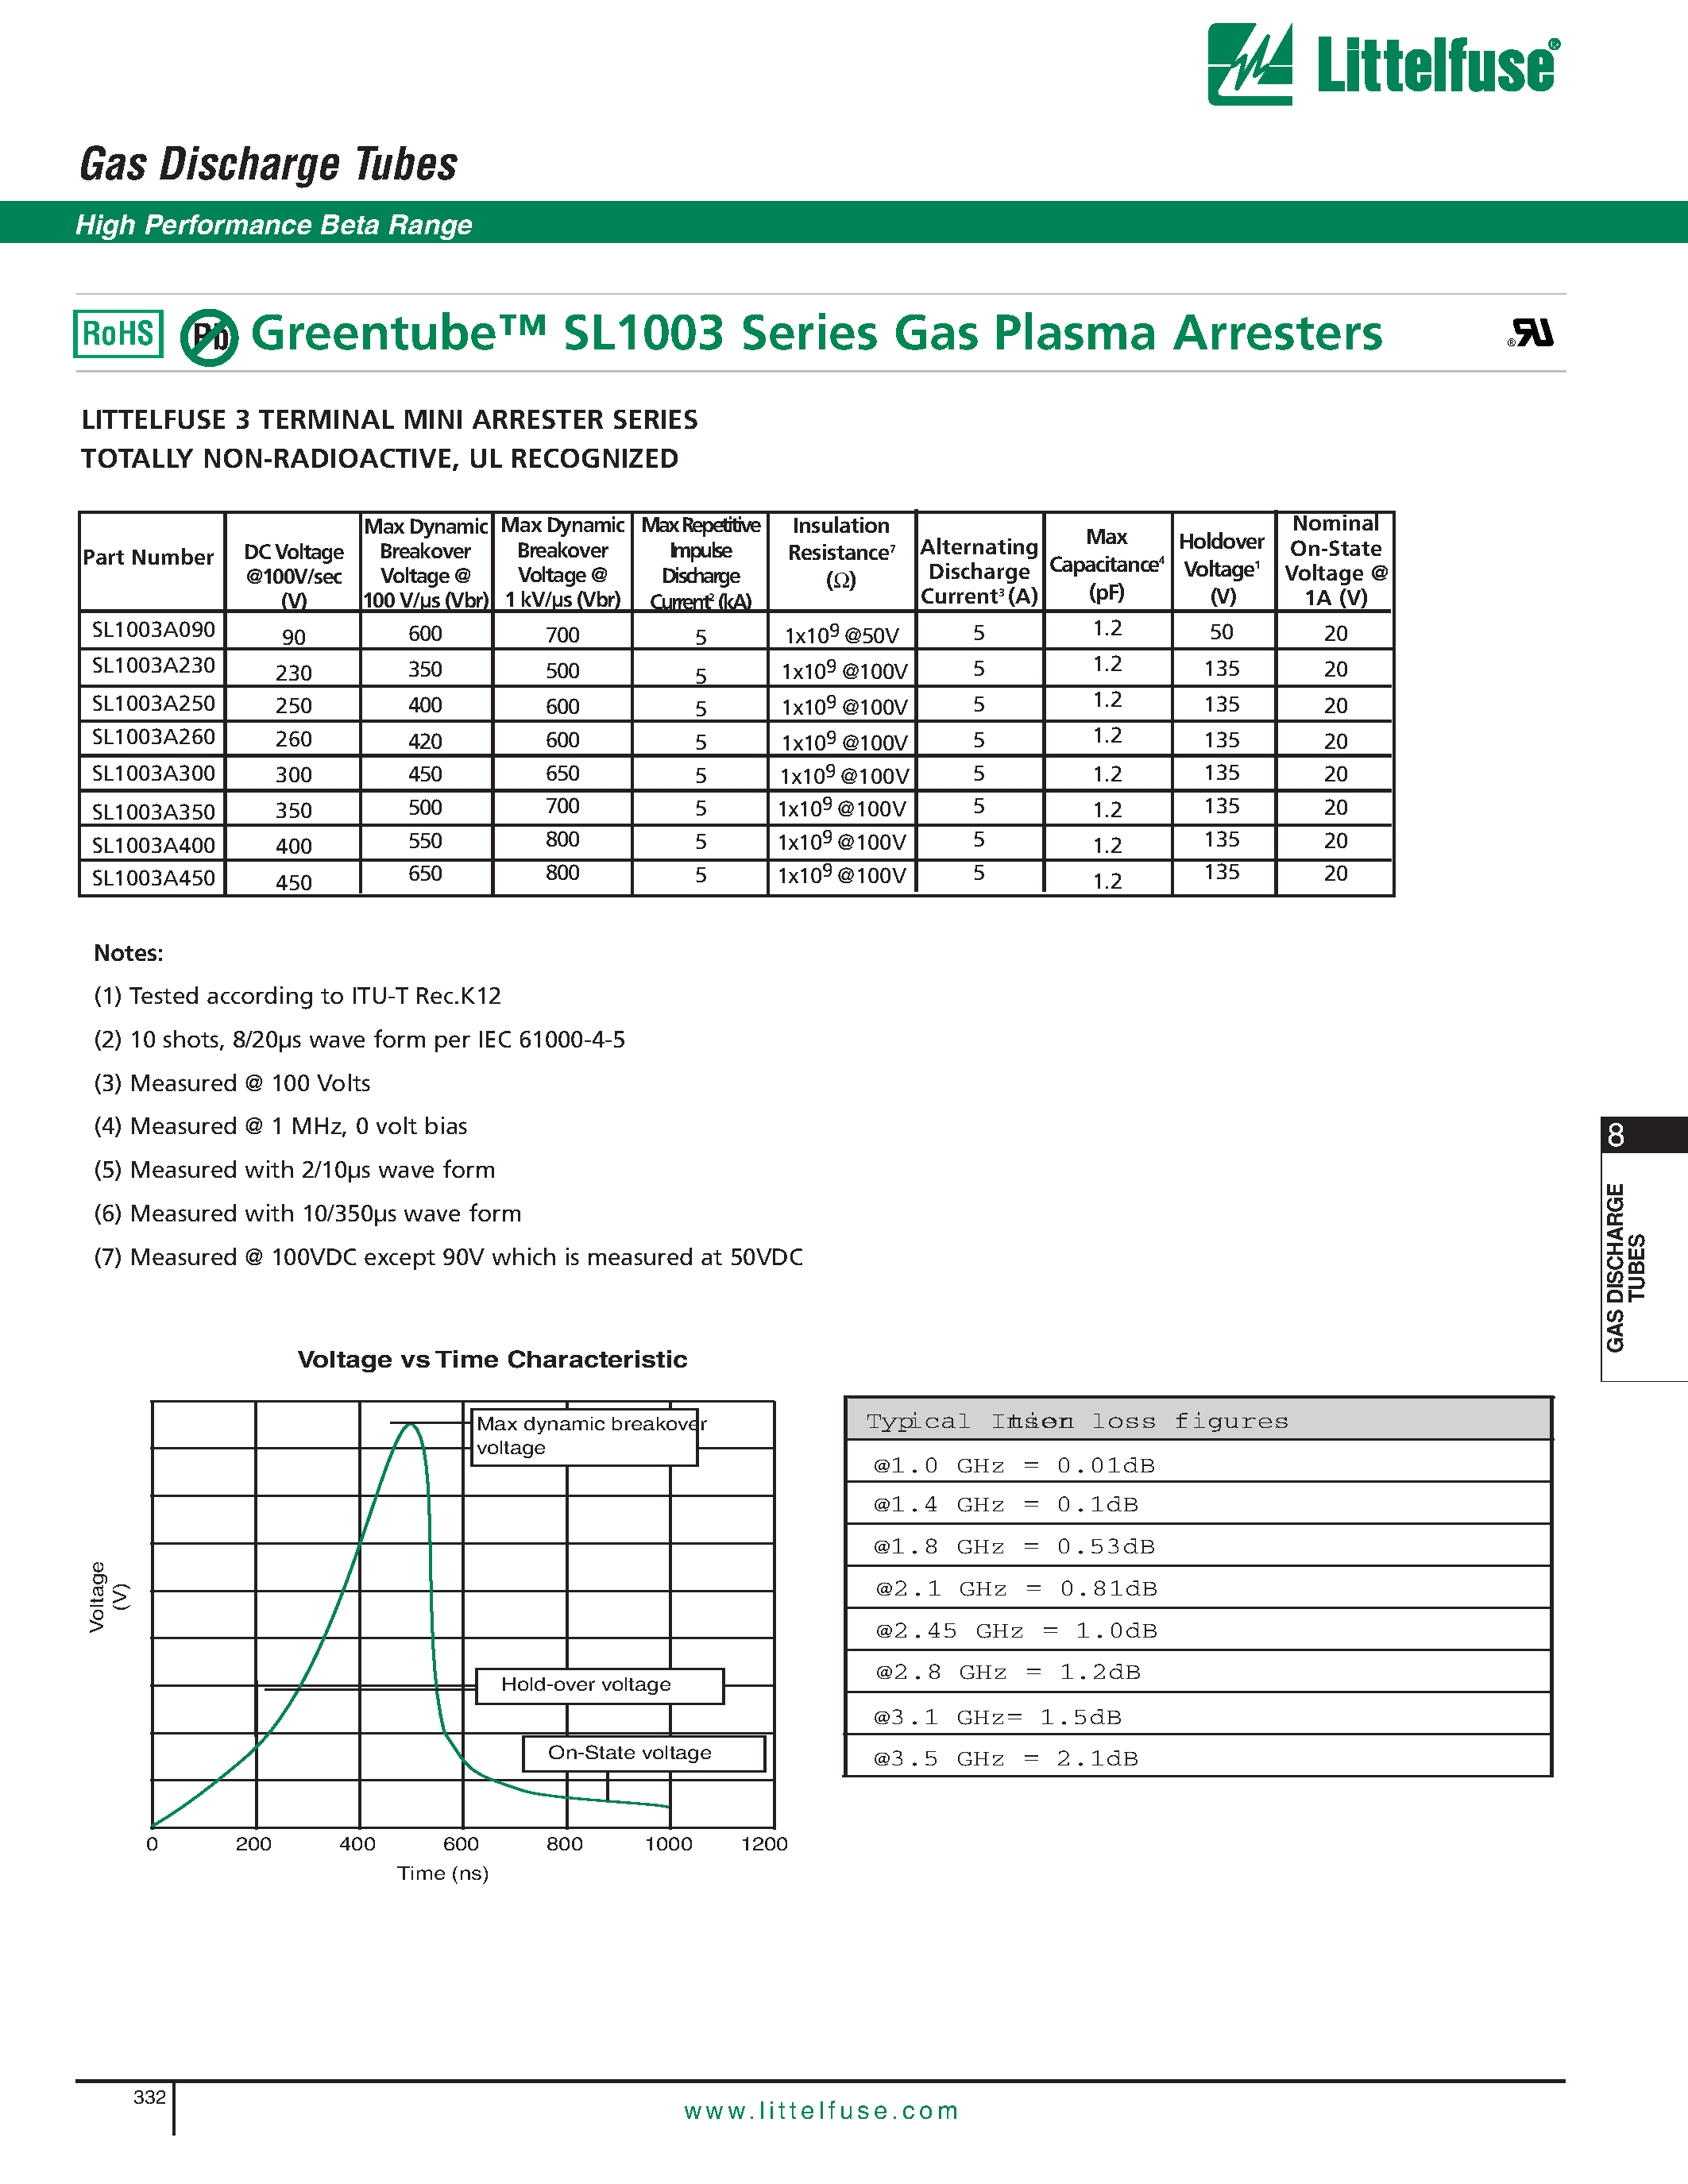 Даташит SL1003A450 - Greentube SL1003 Series Gas Plasma Arresters страница 2